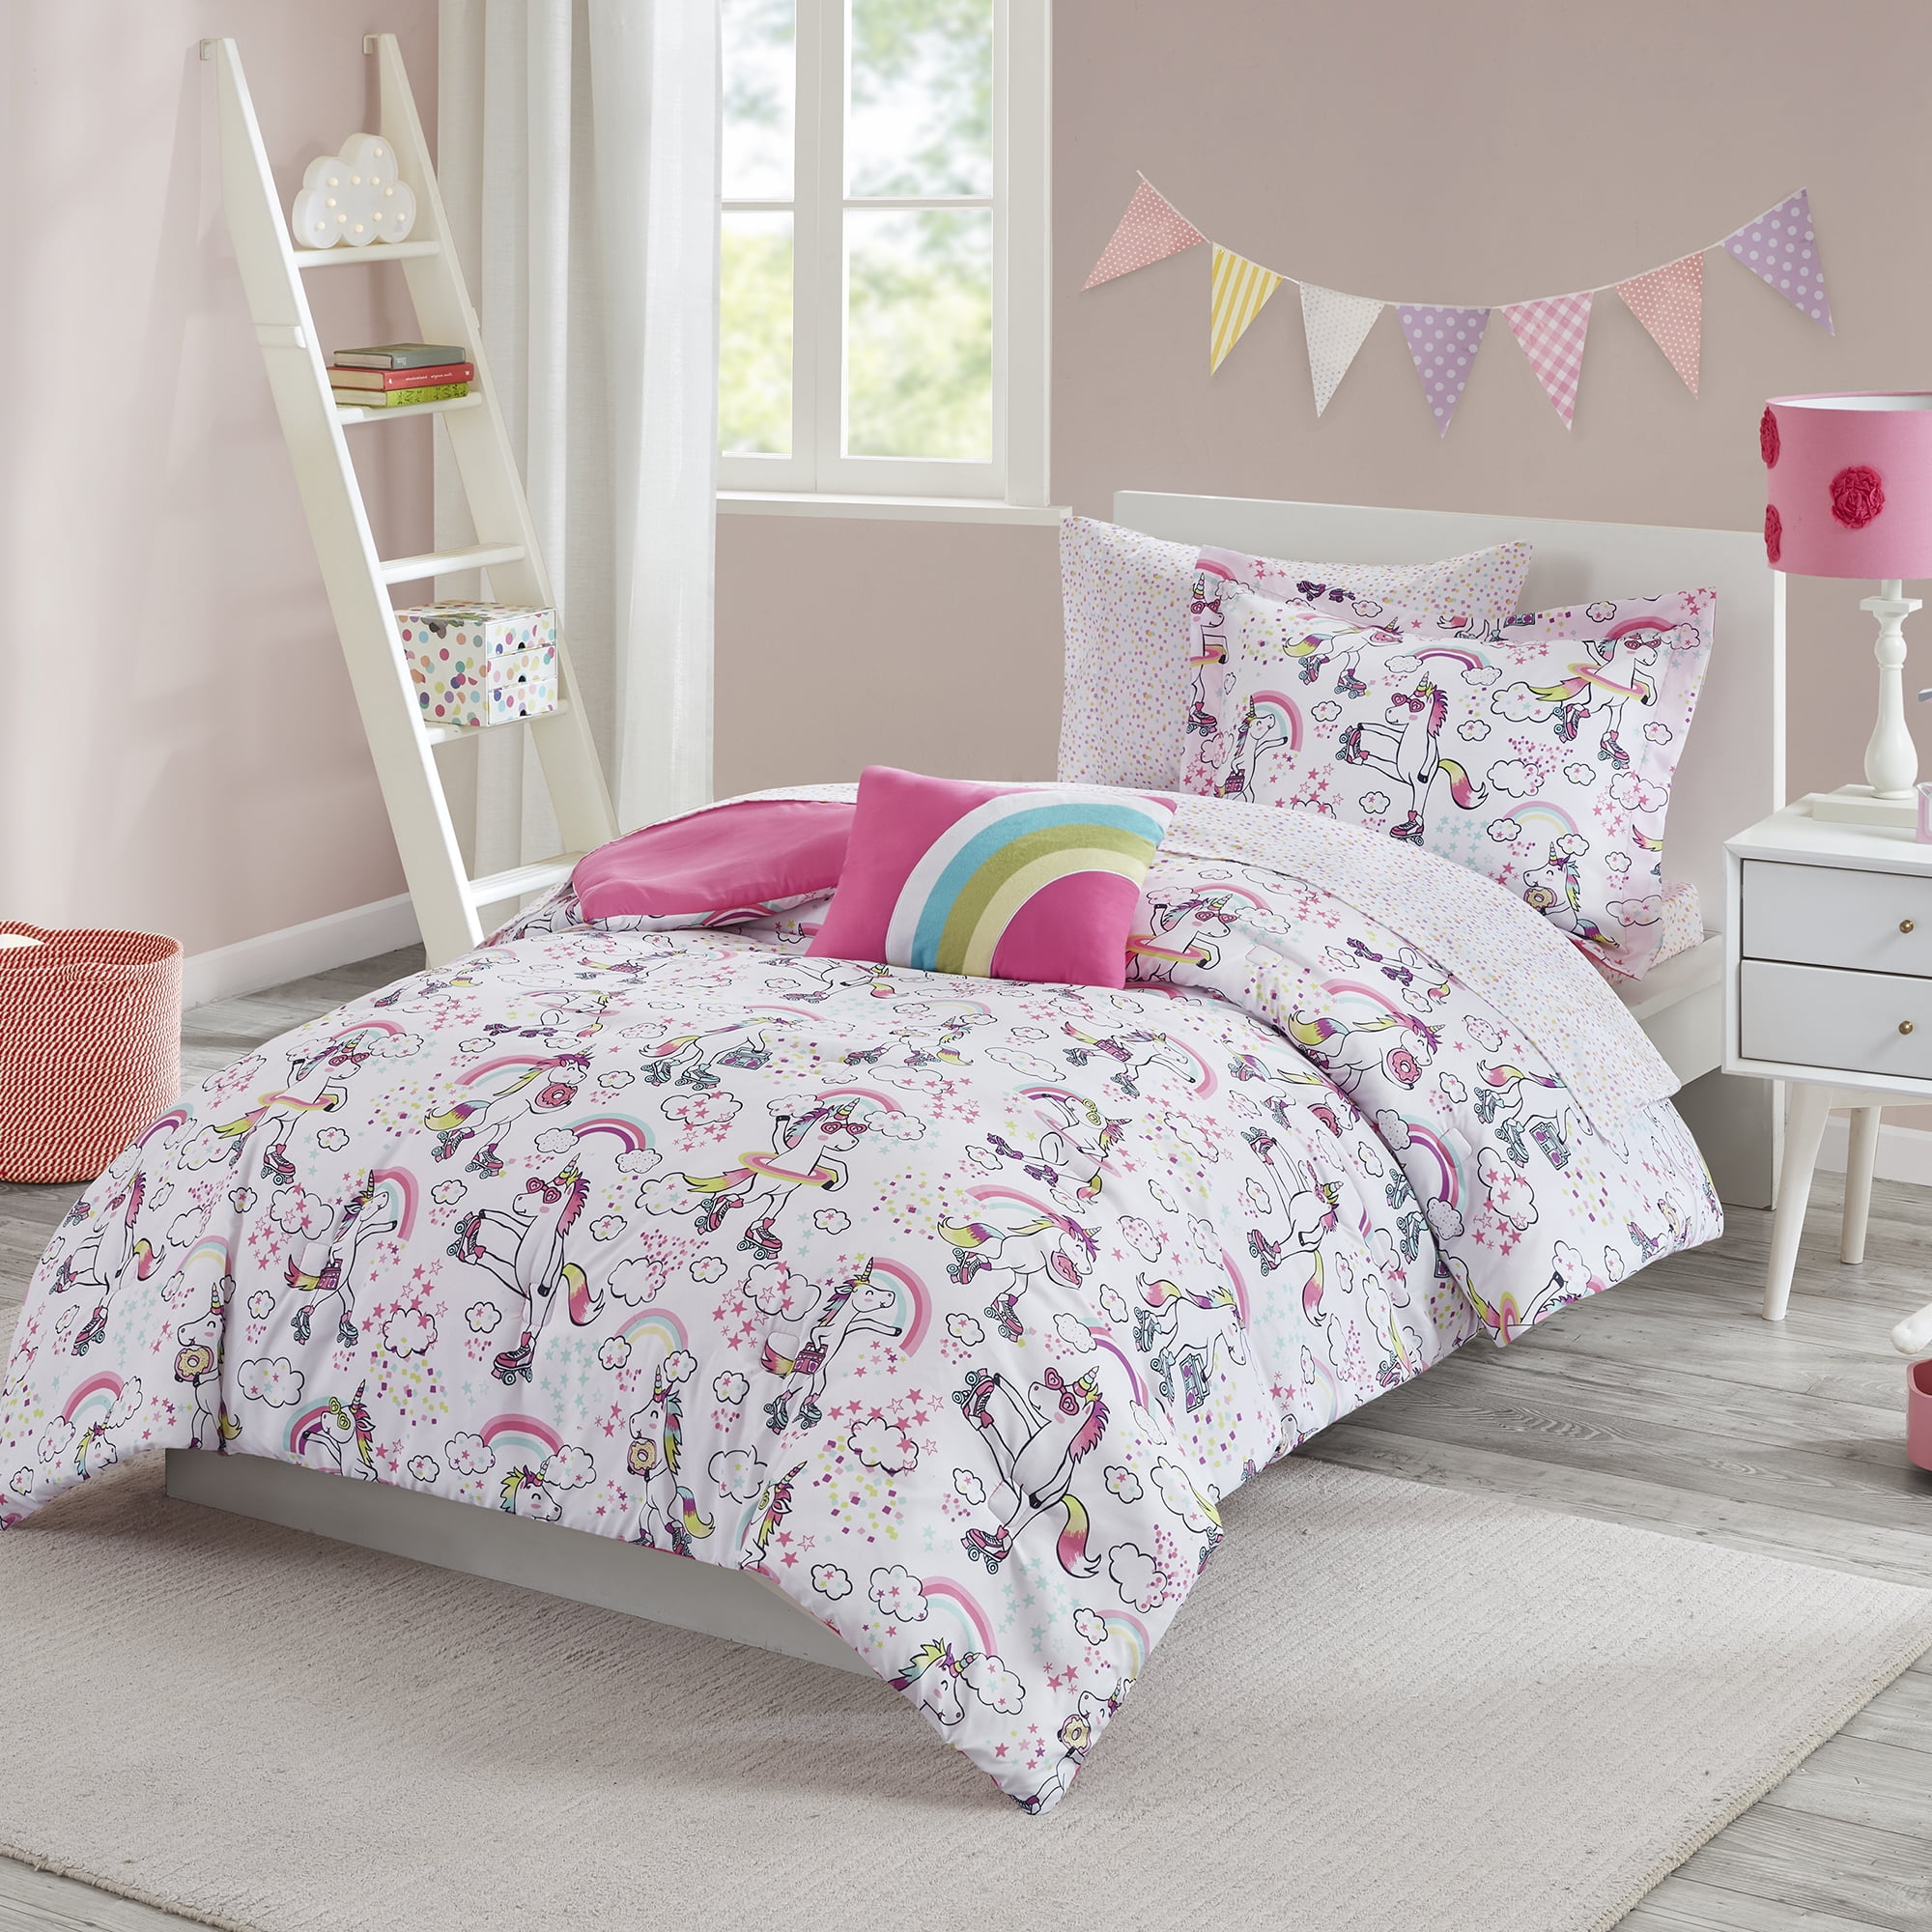 Sleep Zone Girls Unicorn Twin Sheet Set Hot Pink 